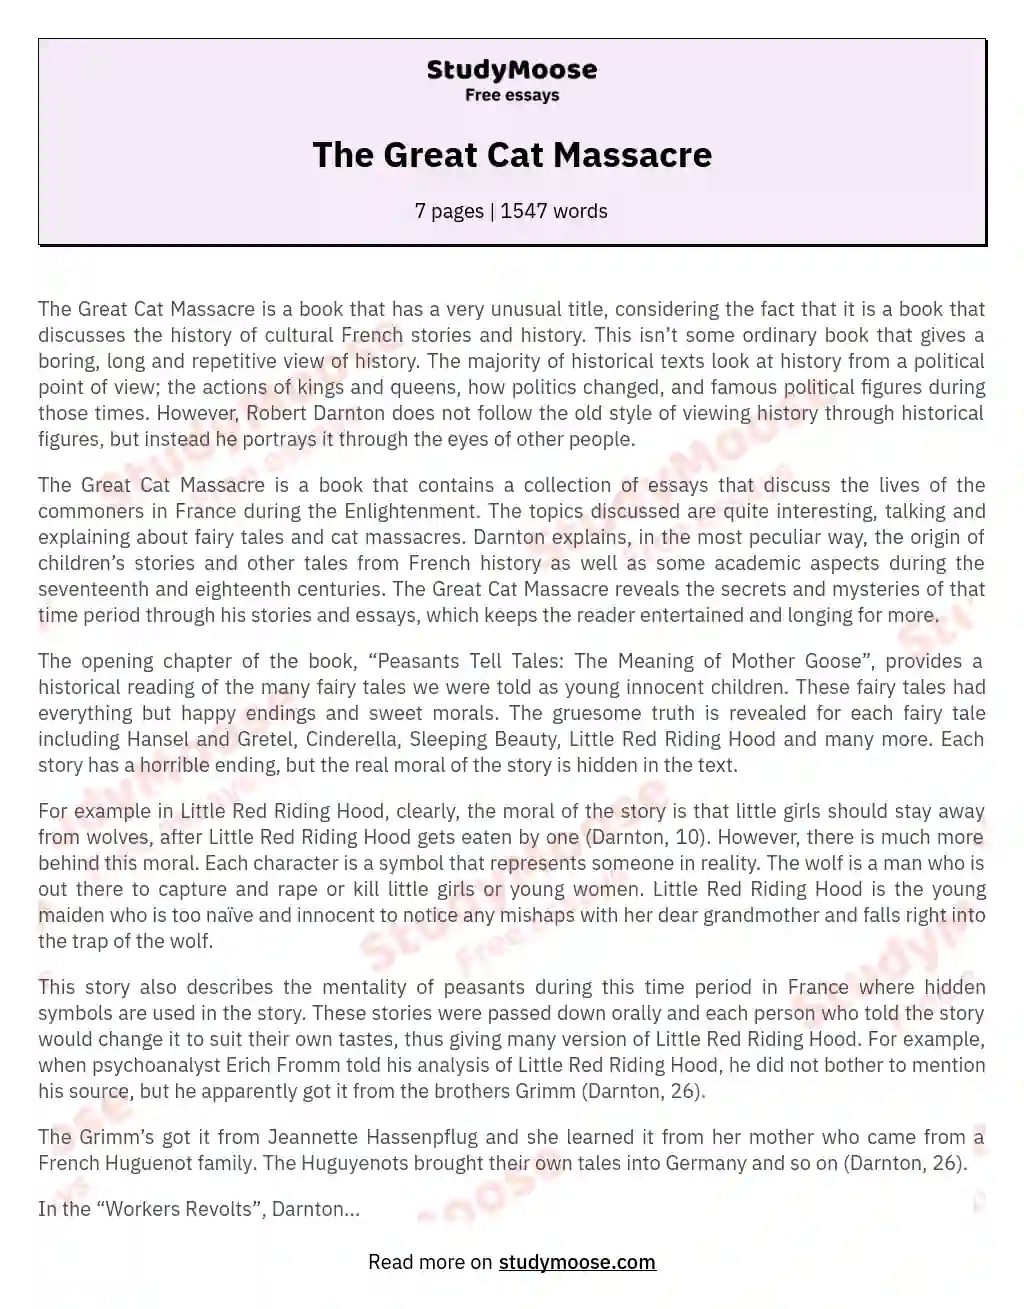 The Great Cat Massacre essay